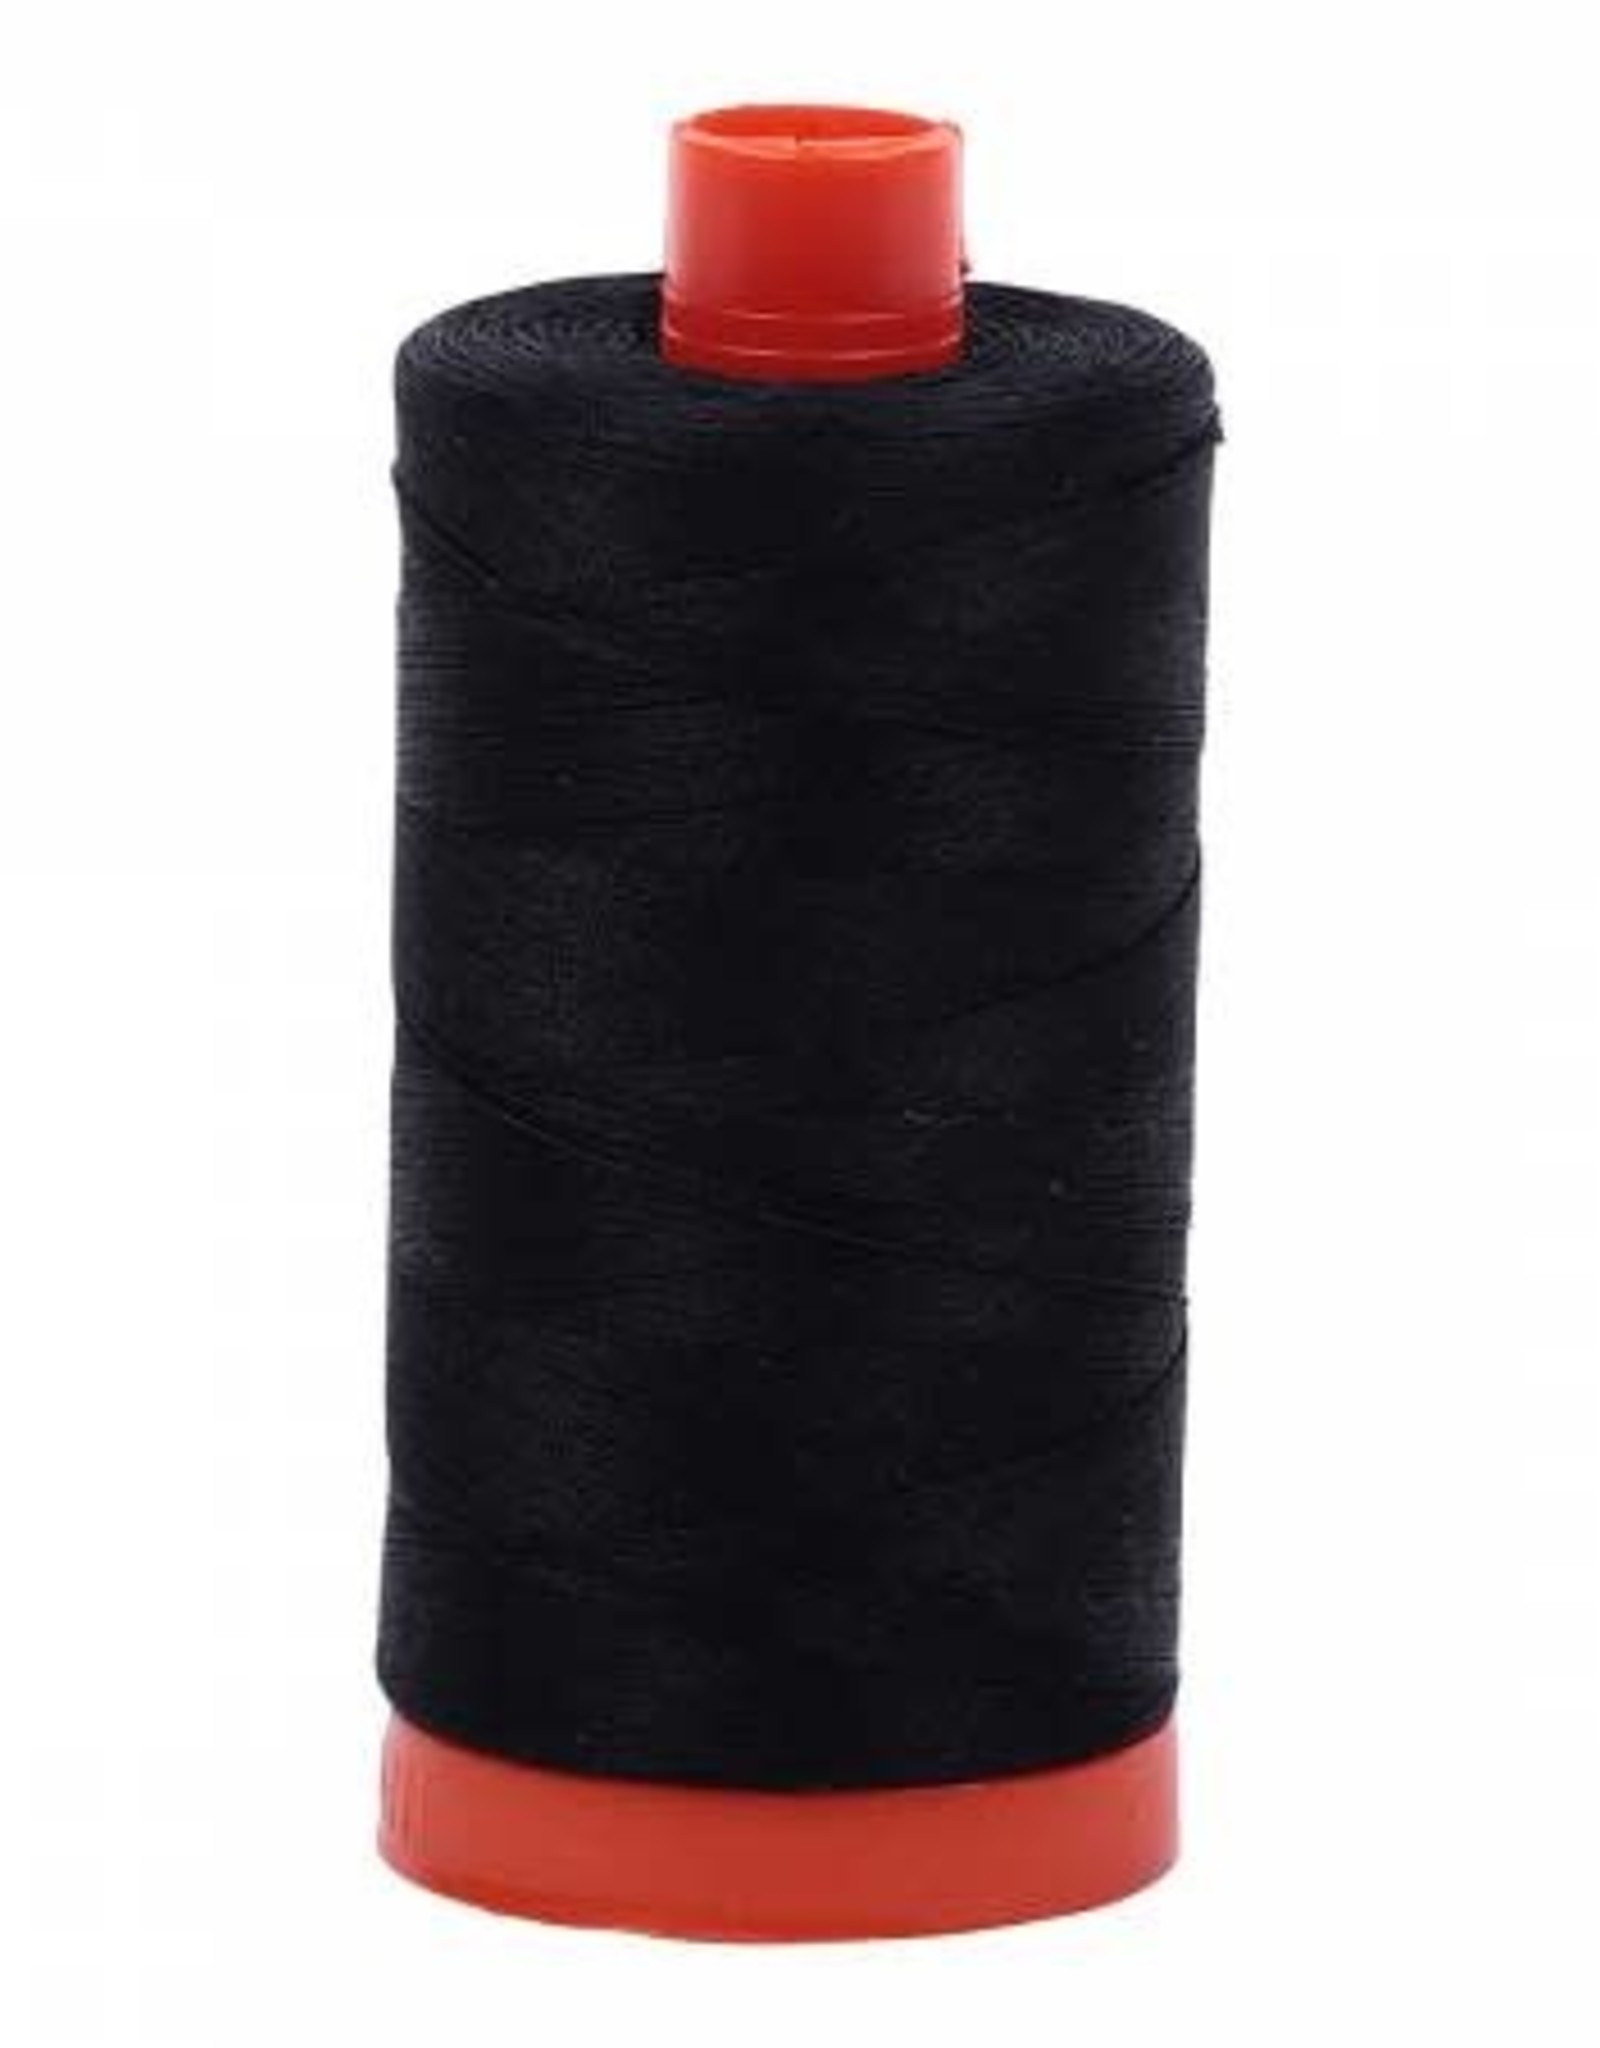 Mako Cotton Thread Solid 50wt - Black (2692)